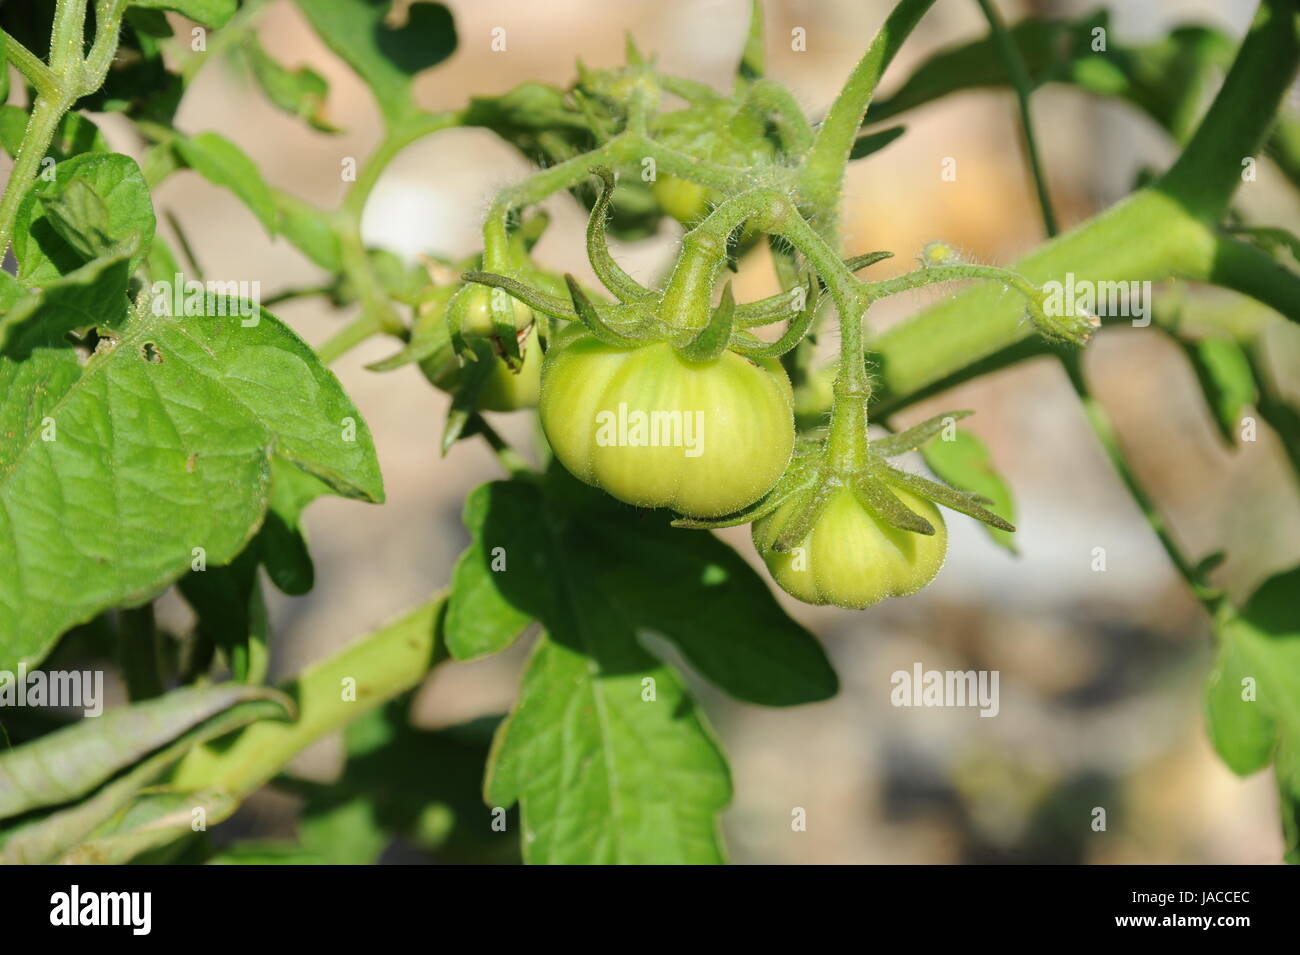 spain - tomatoes Stock Photo